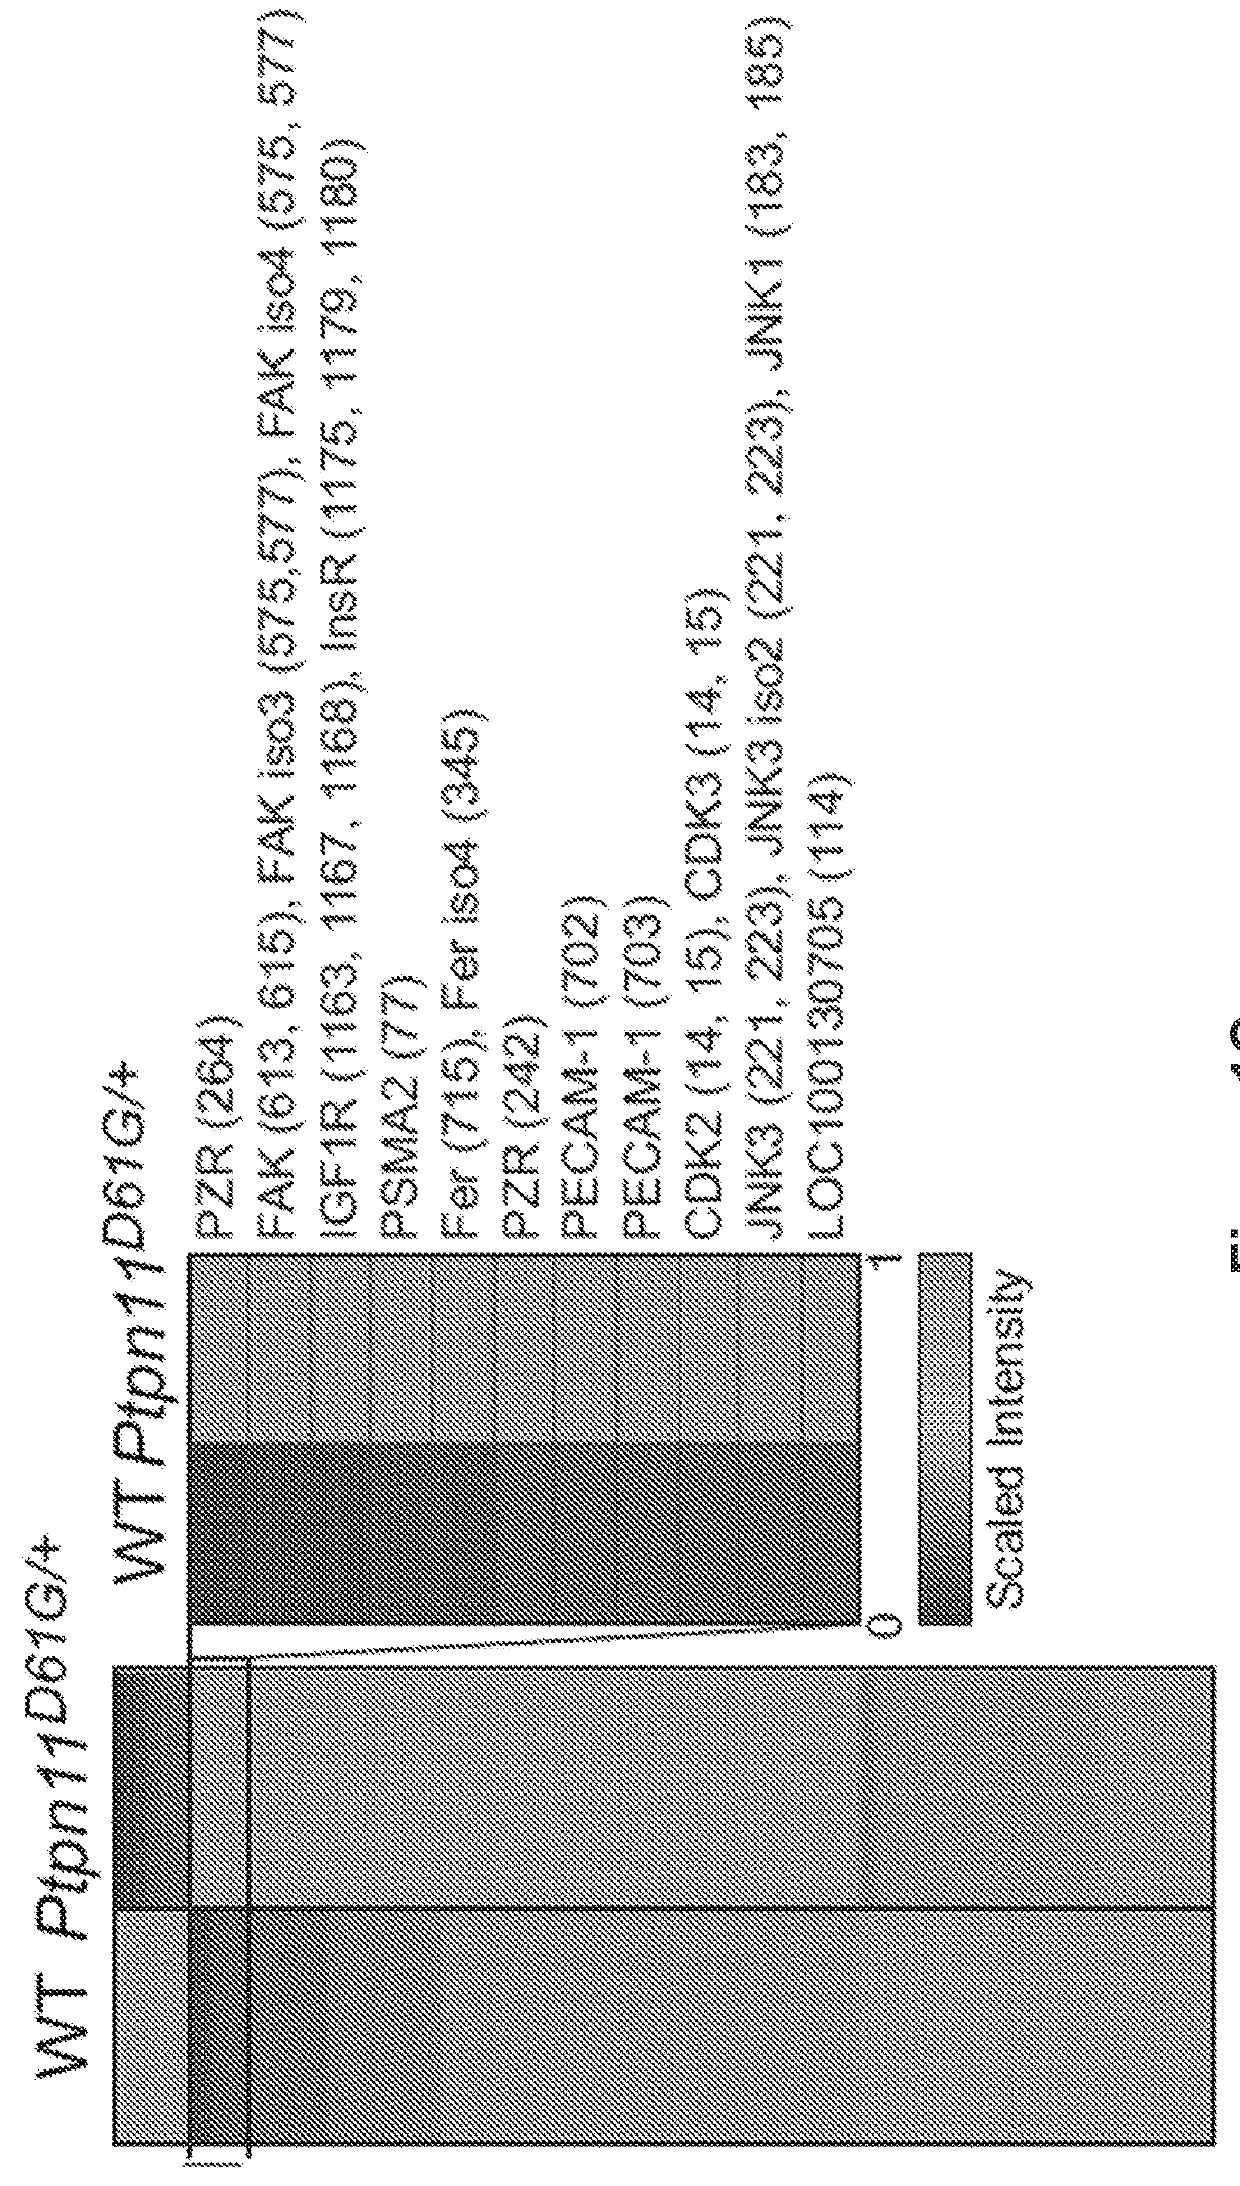 Compositions and methods of using tyrosine kinase inhibitors